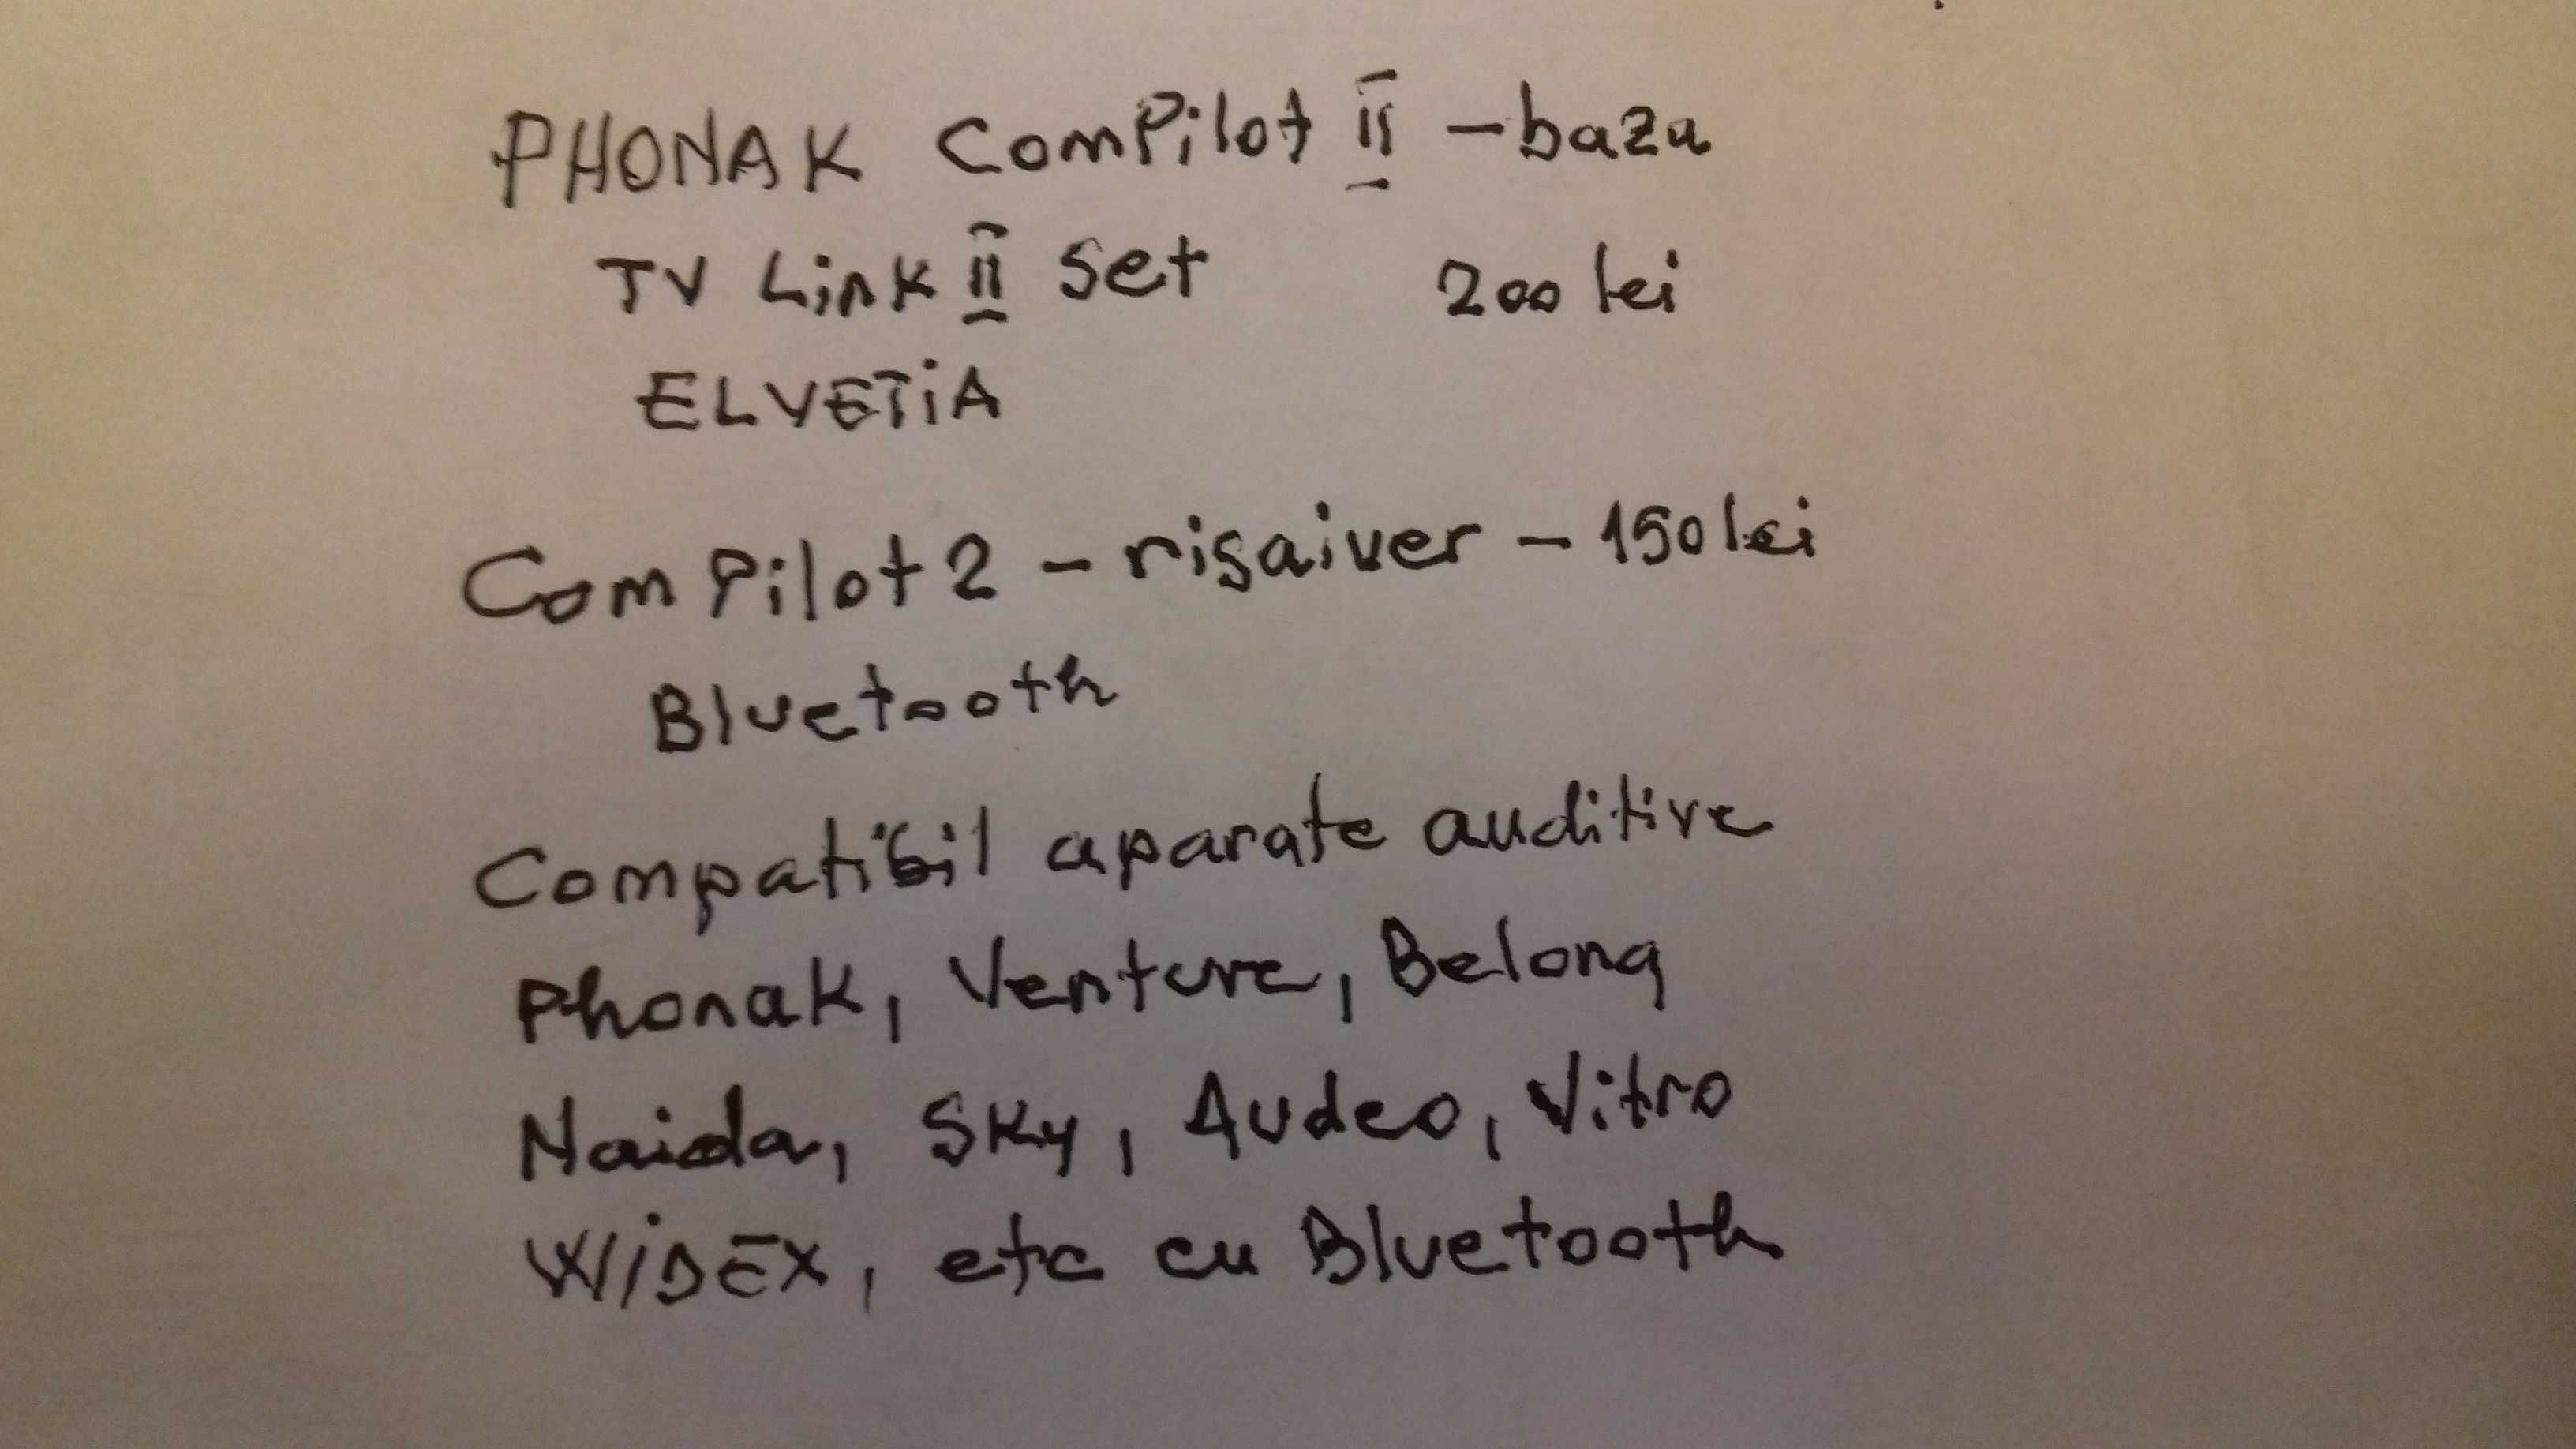 Phonak ComPilot 2 TV Link 2 / baza + ComPilot 2 risaiver Bluetooth